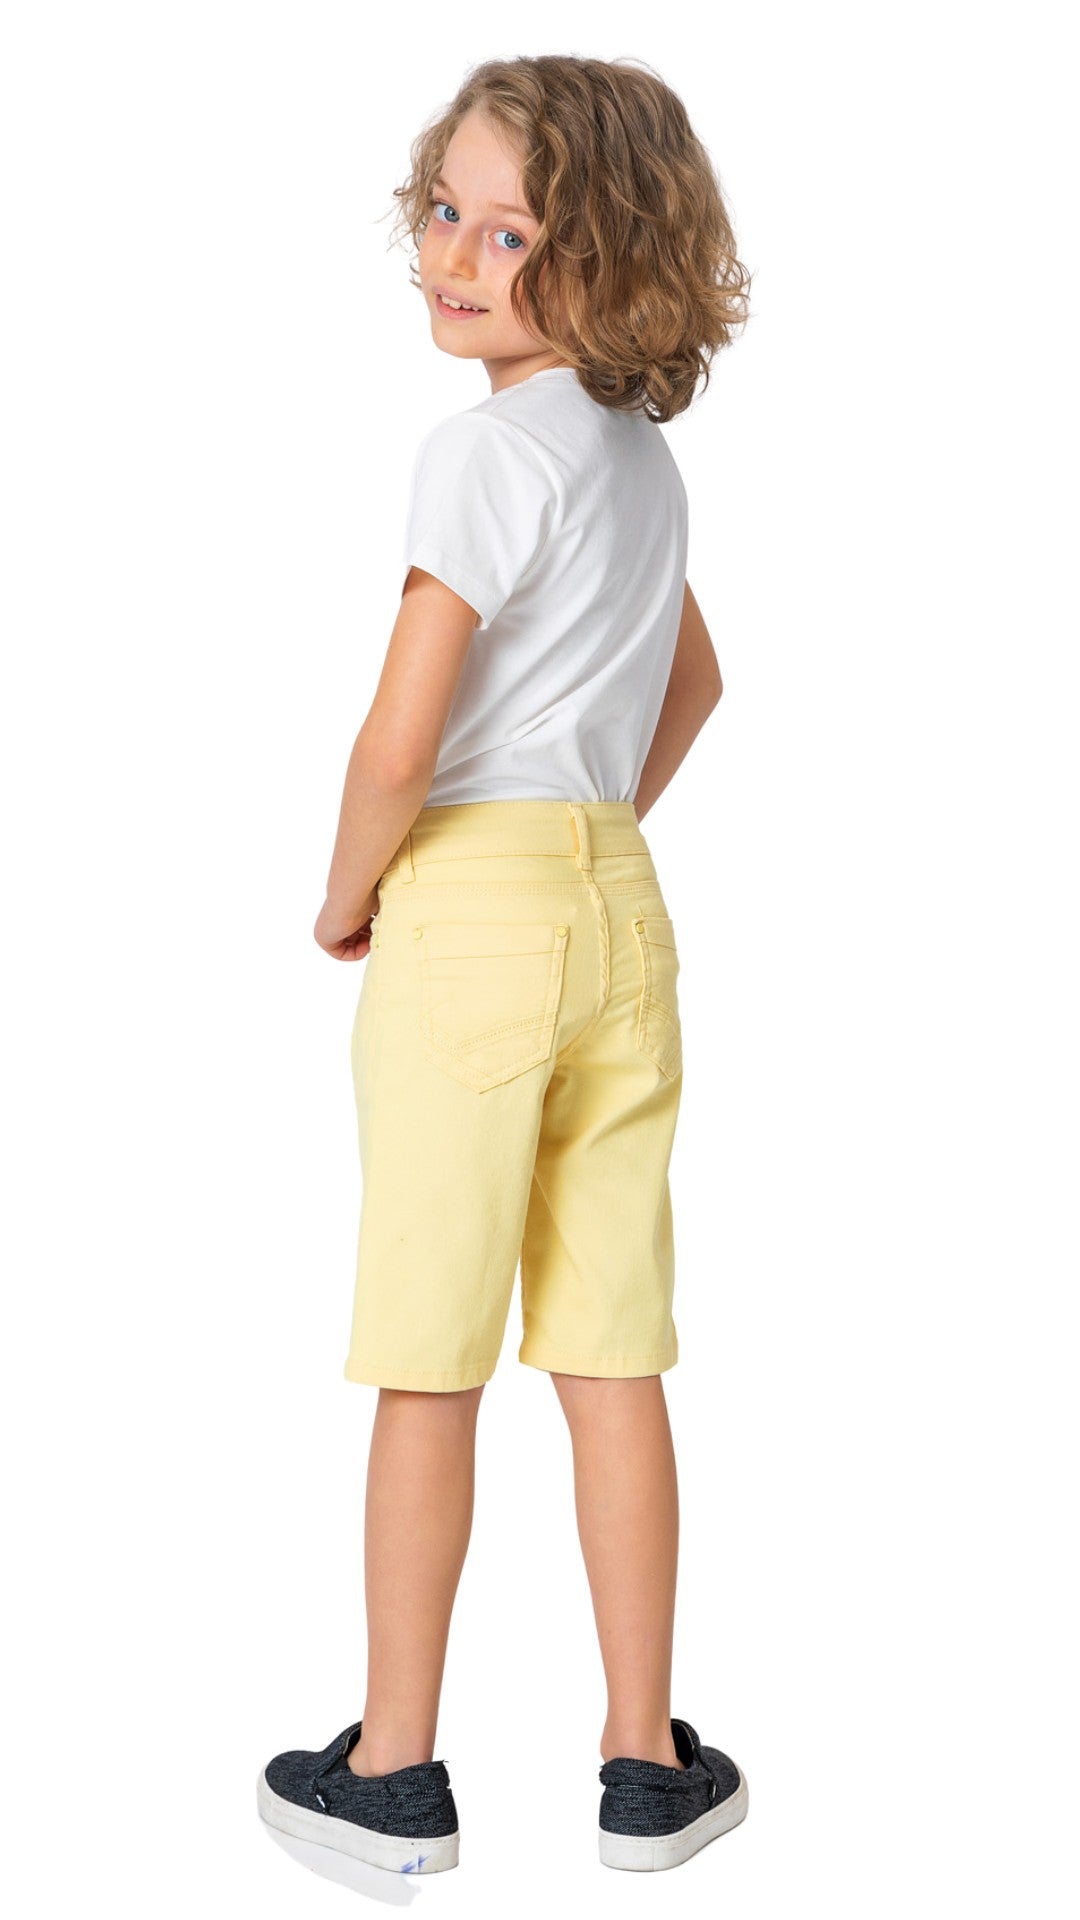 InCity Boys Tween 7-14 Years Regular Fit Casual Cotton Lanarc Shorts InCity Boys Girls